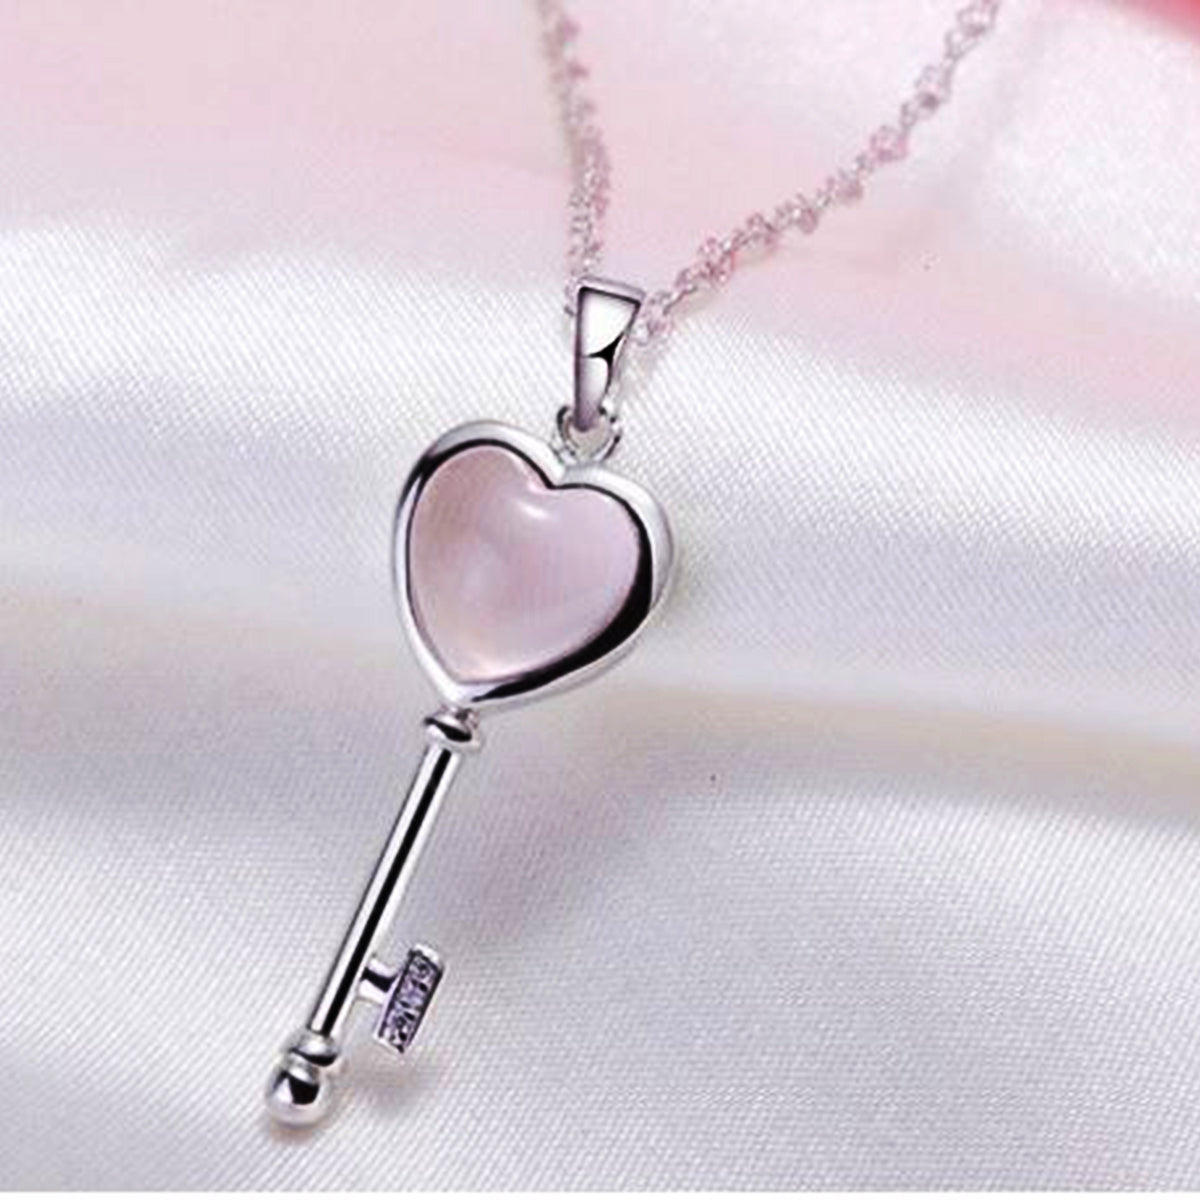 14k White Gold Plated Heart Moonstone Love Key Pendant Necklace